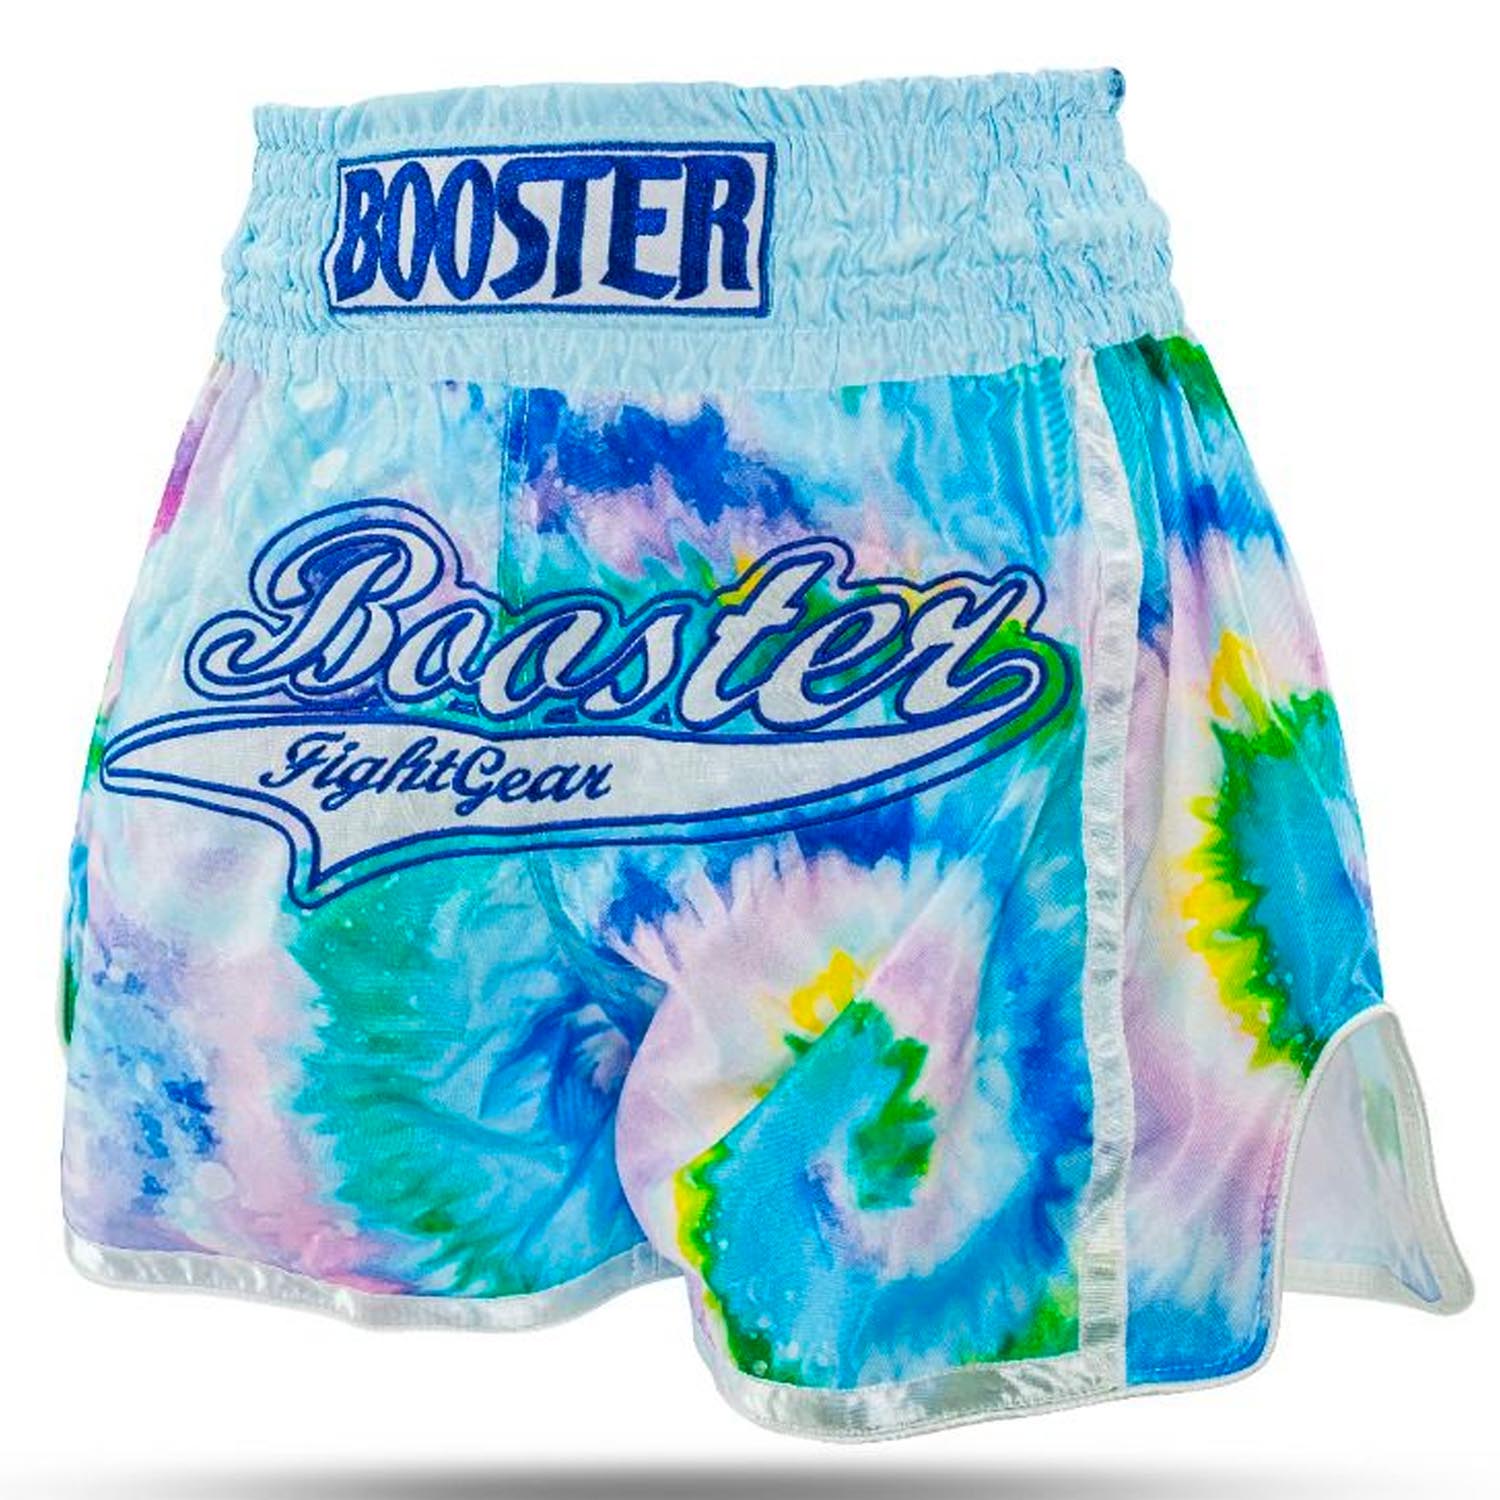 Booster Muay Thai Shorts, Swirl, blue, S